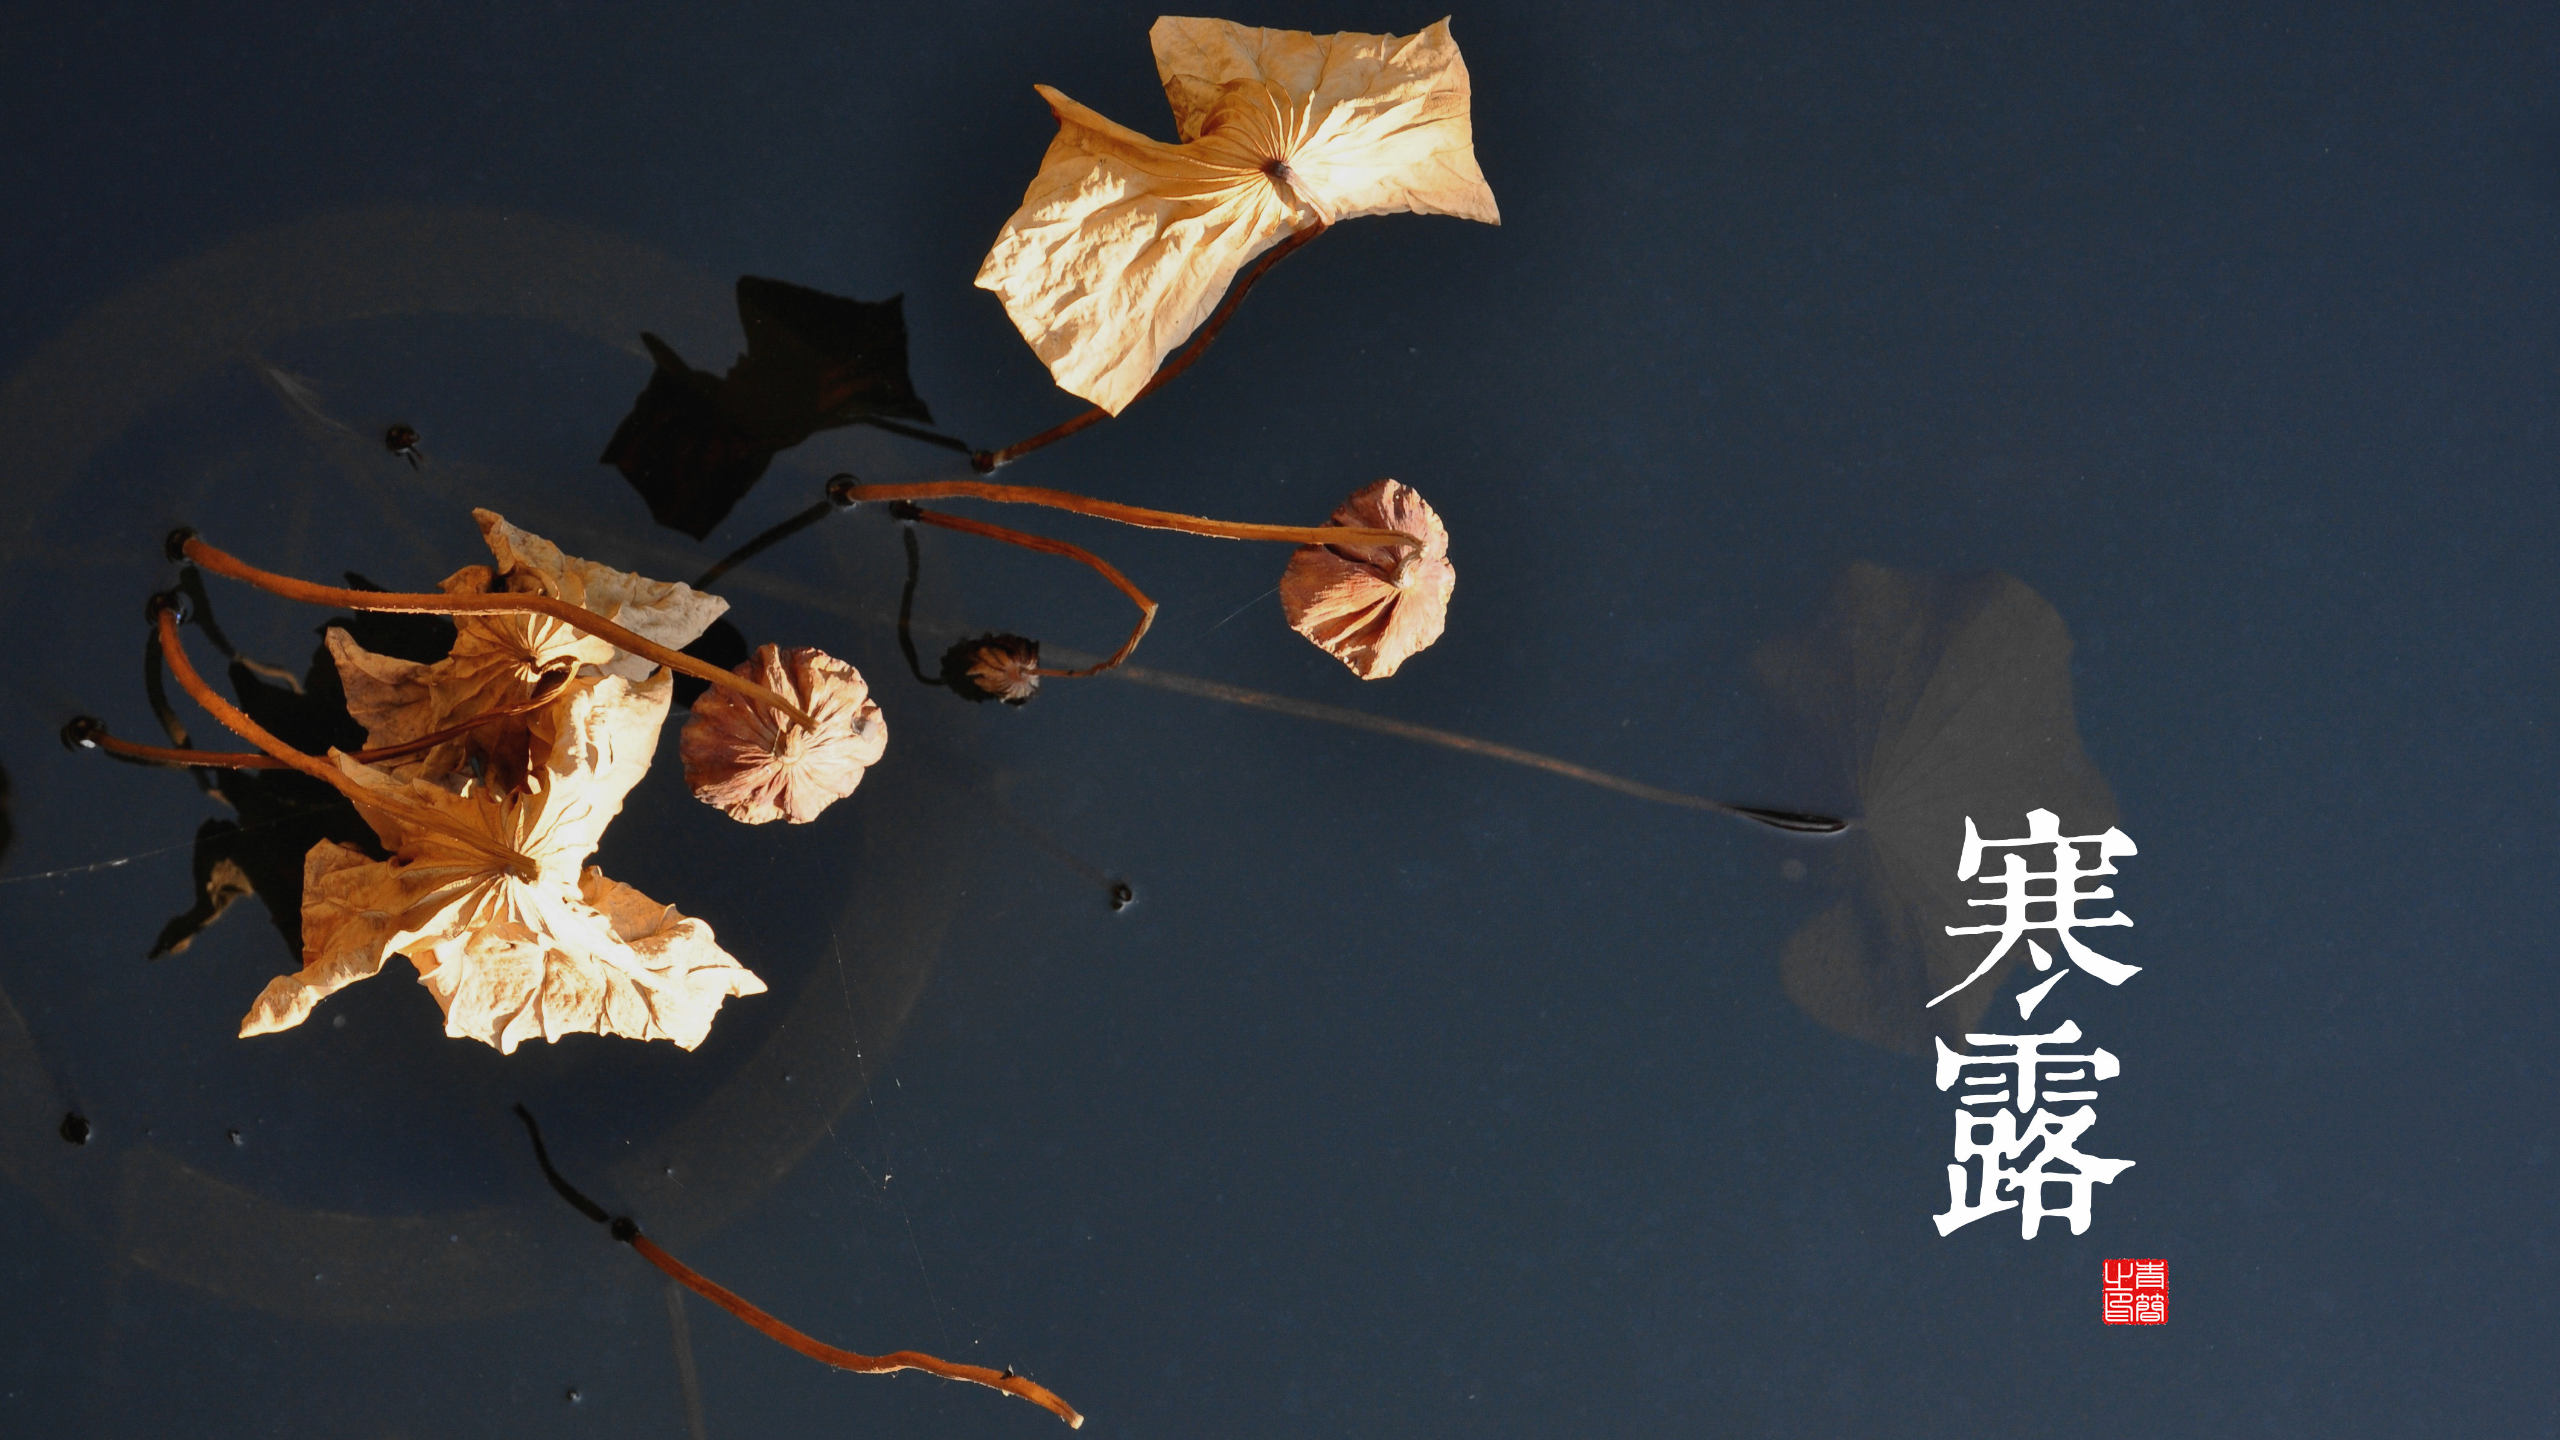 General 2560x1440 seasons digital art Chinese reflection water kanji logo